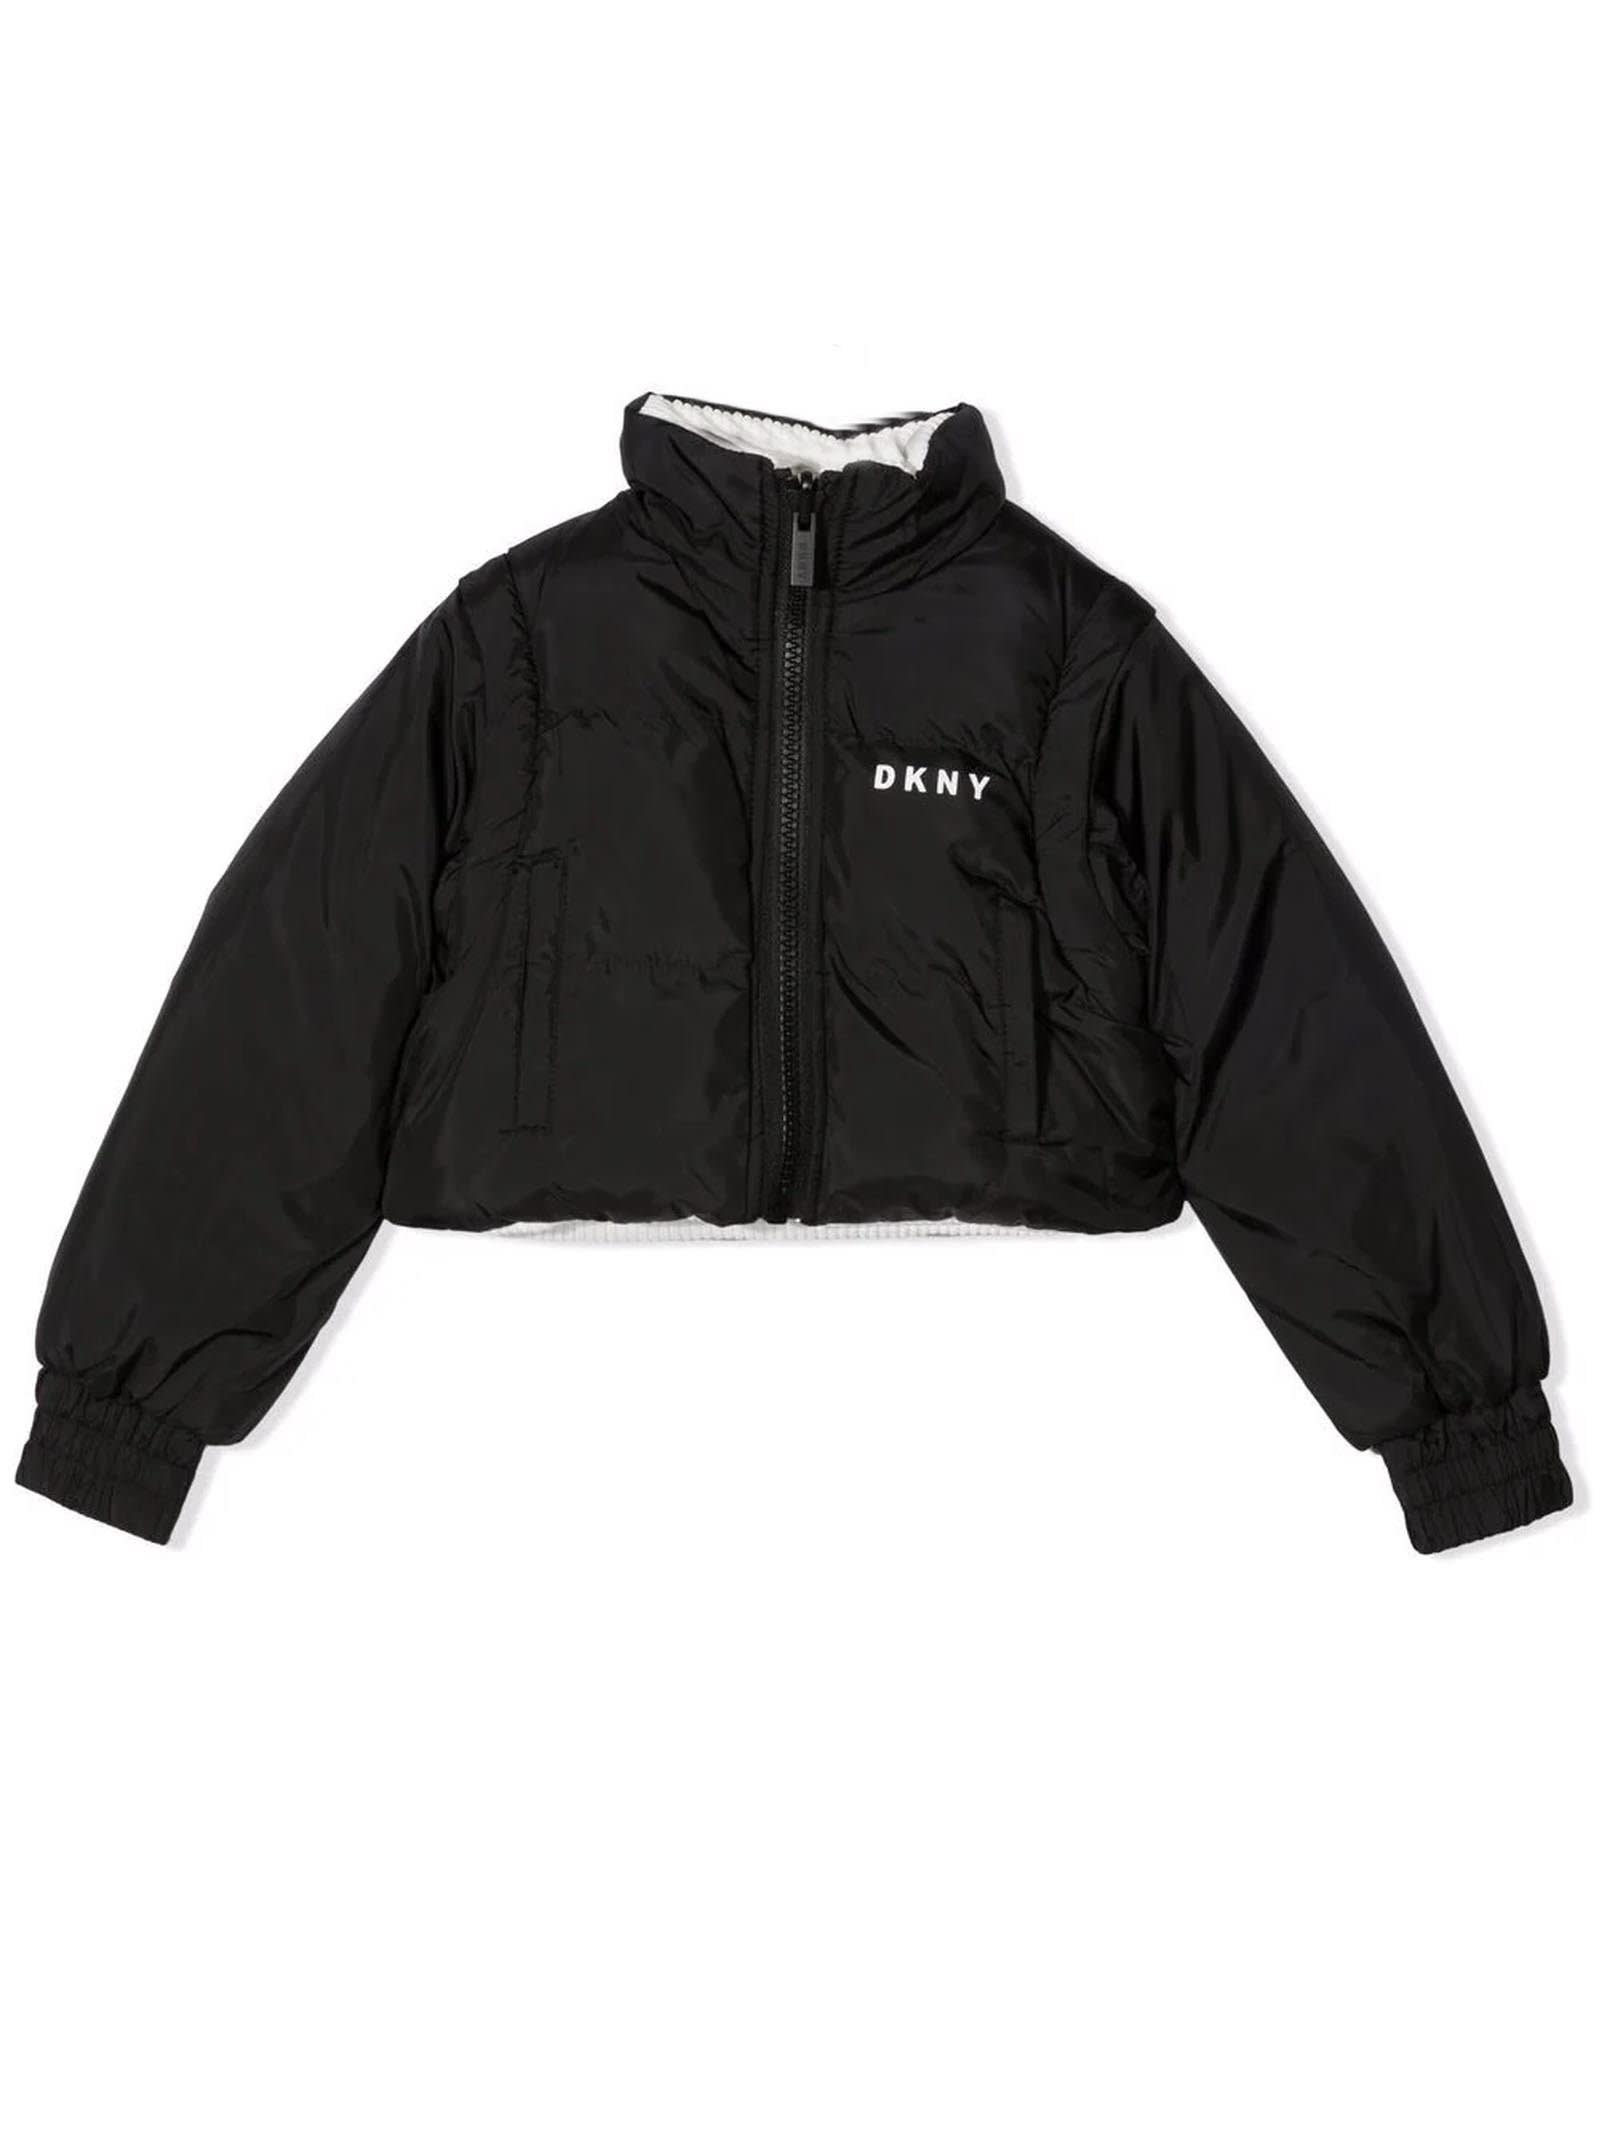 DKNY Black And White Reversible Padded Jacket